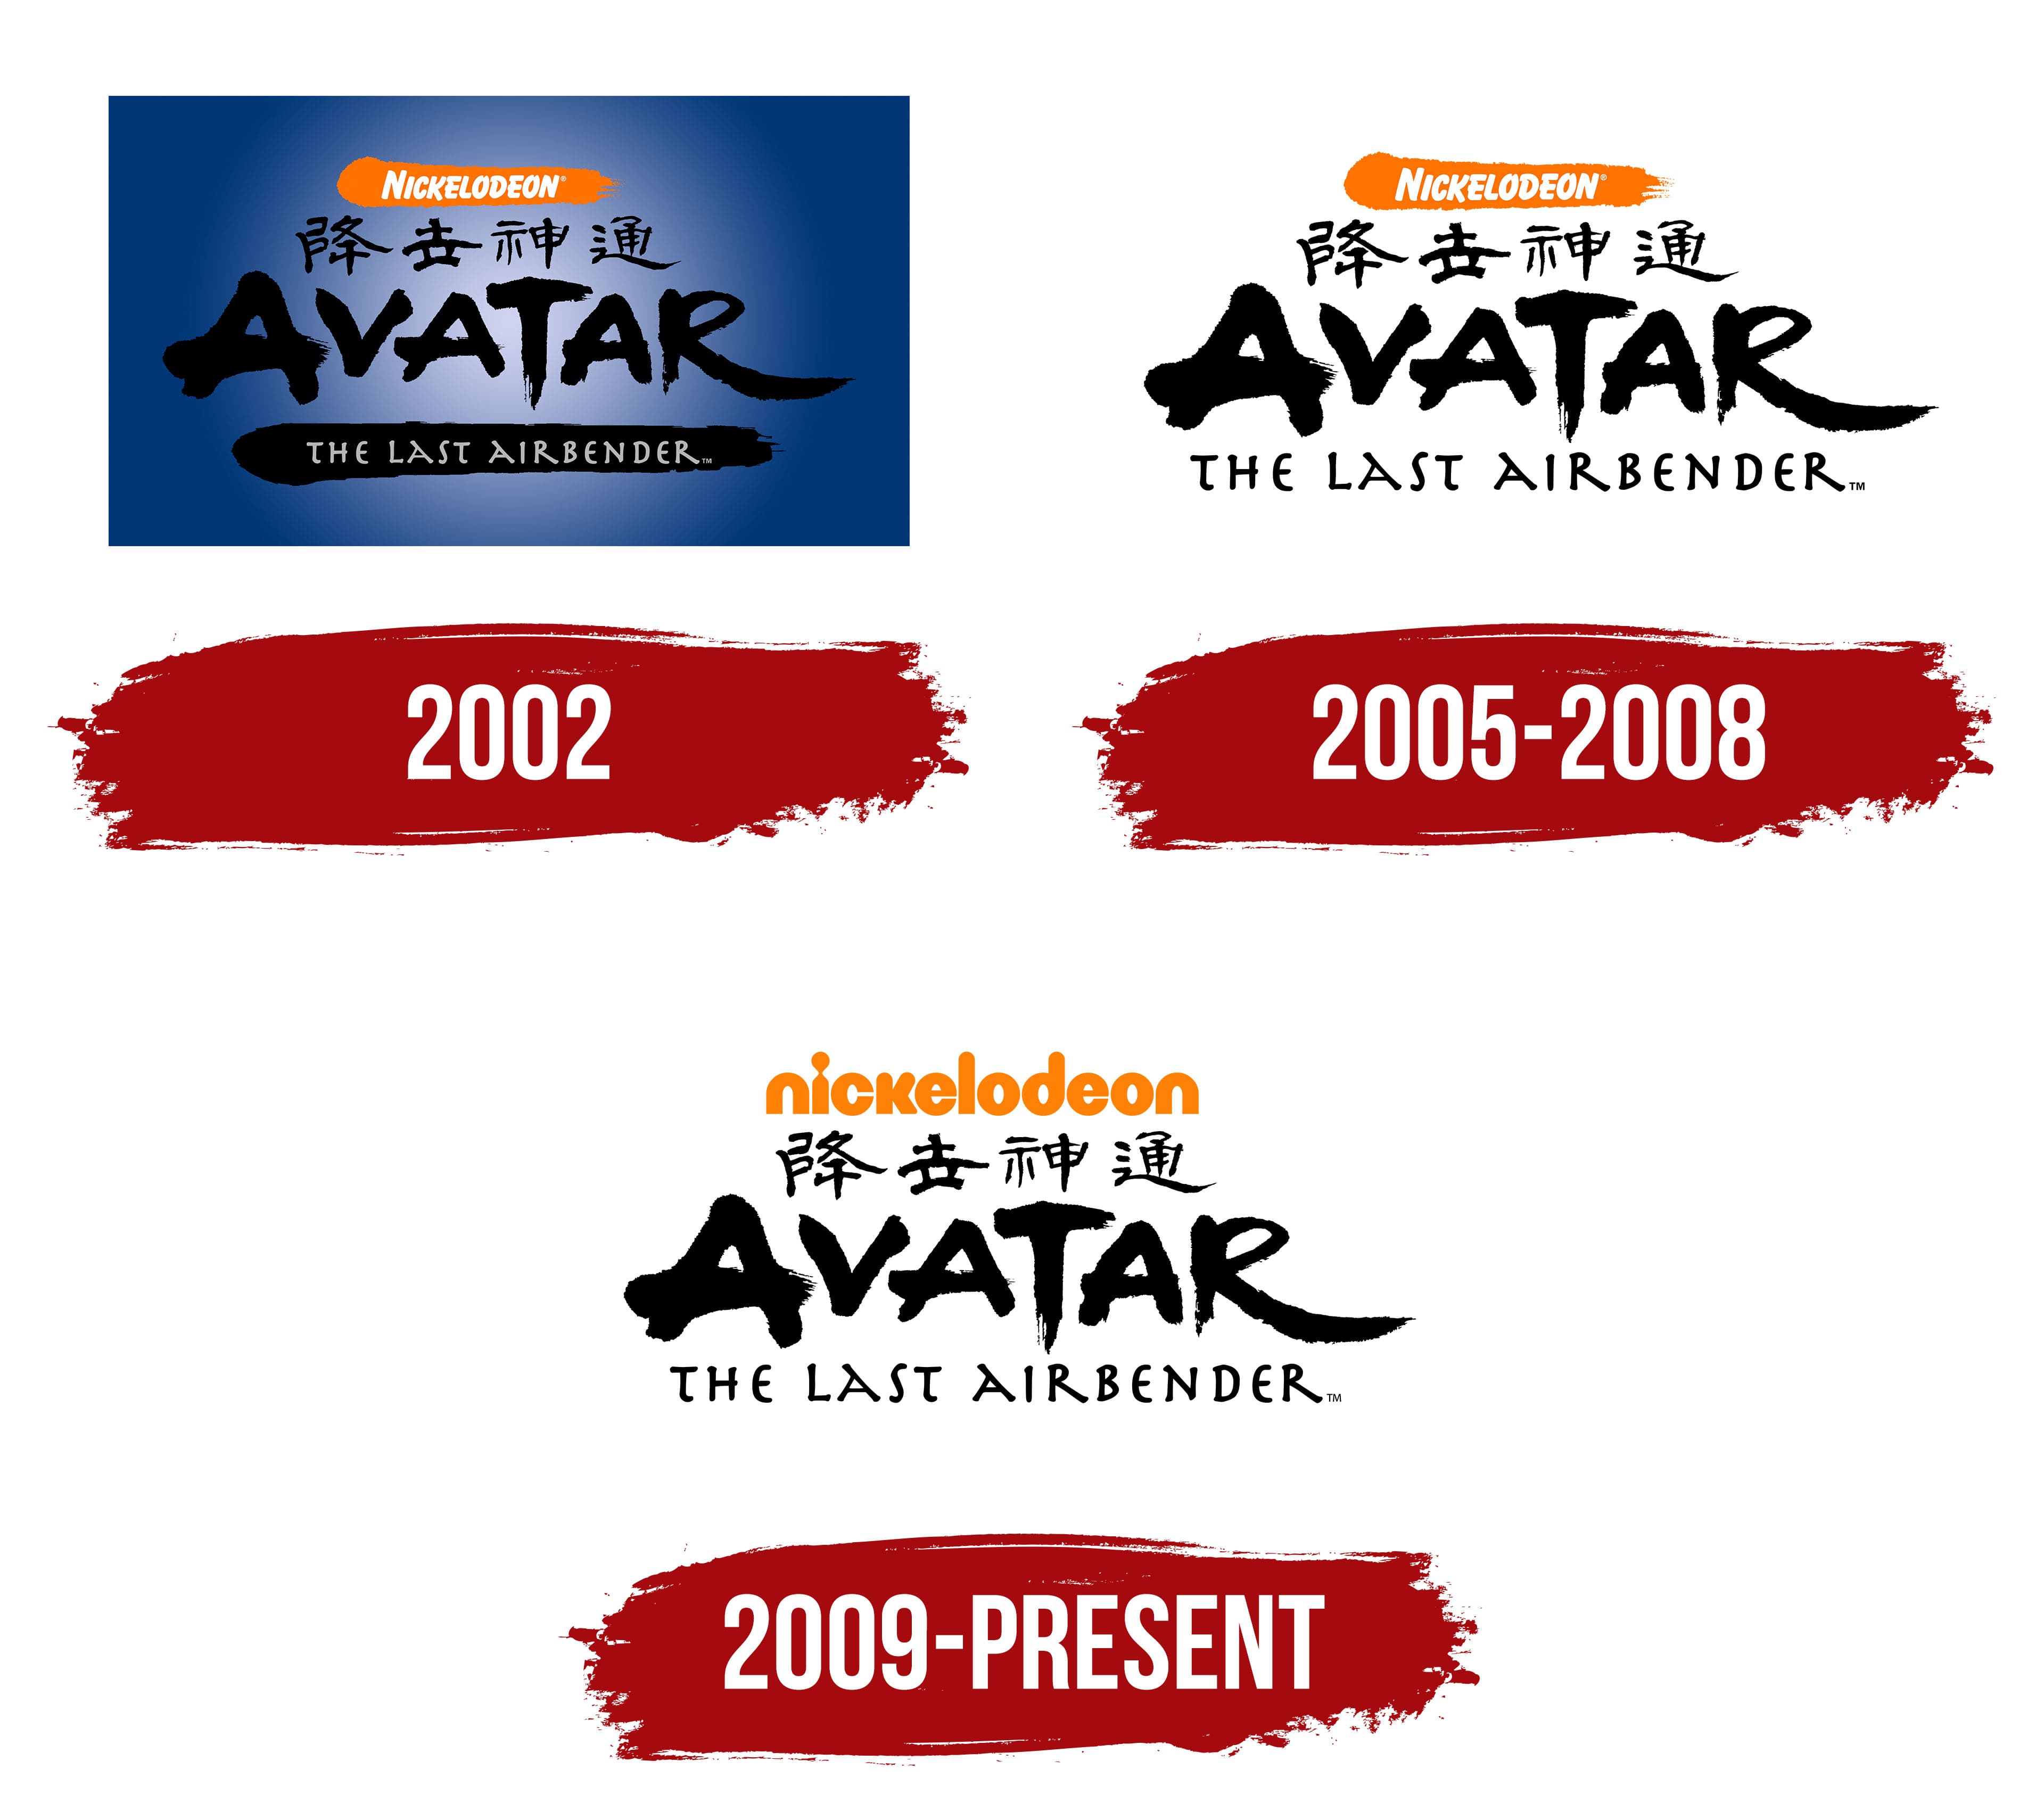 Avatar The Last Airbender Element Symbols by DGLProductions on DeviantArt